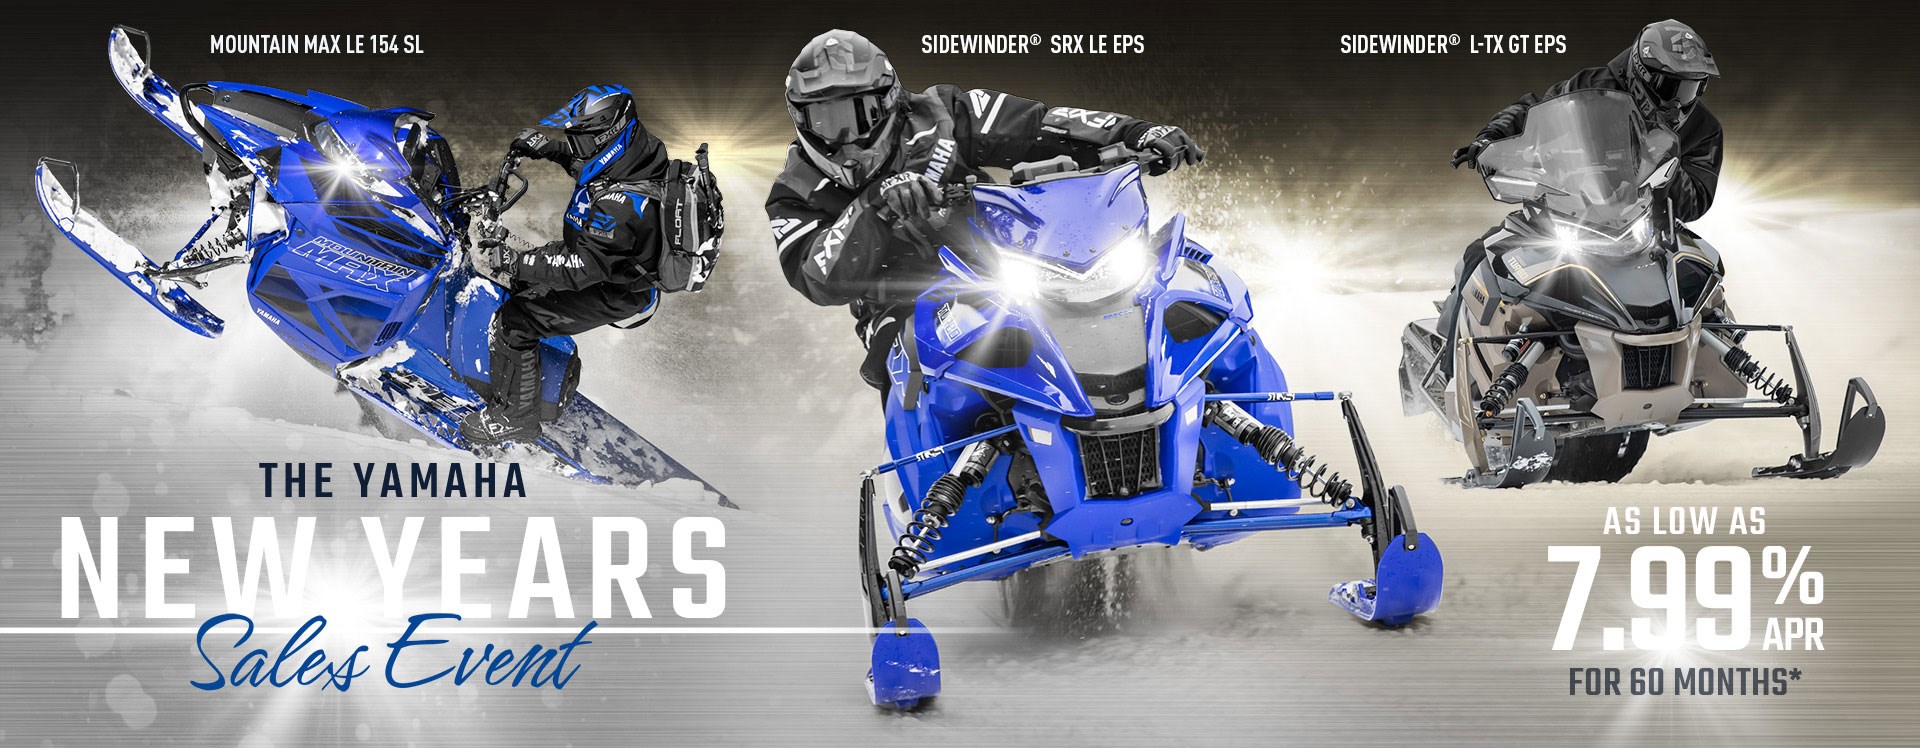 Yamaha Snowmobile Sale info